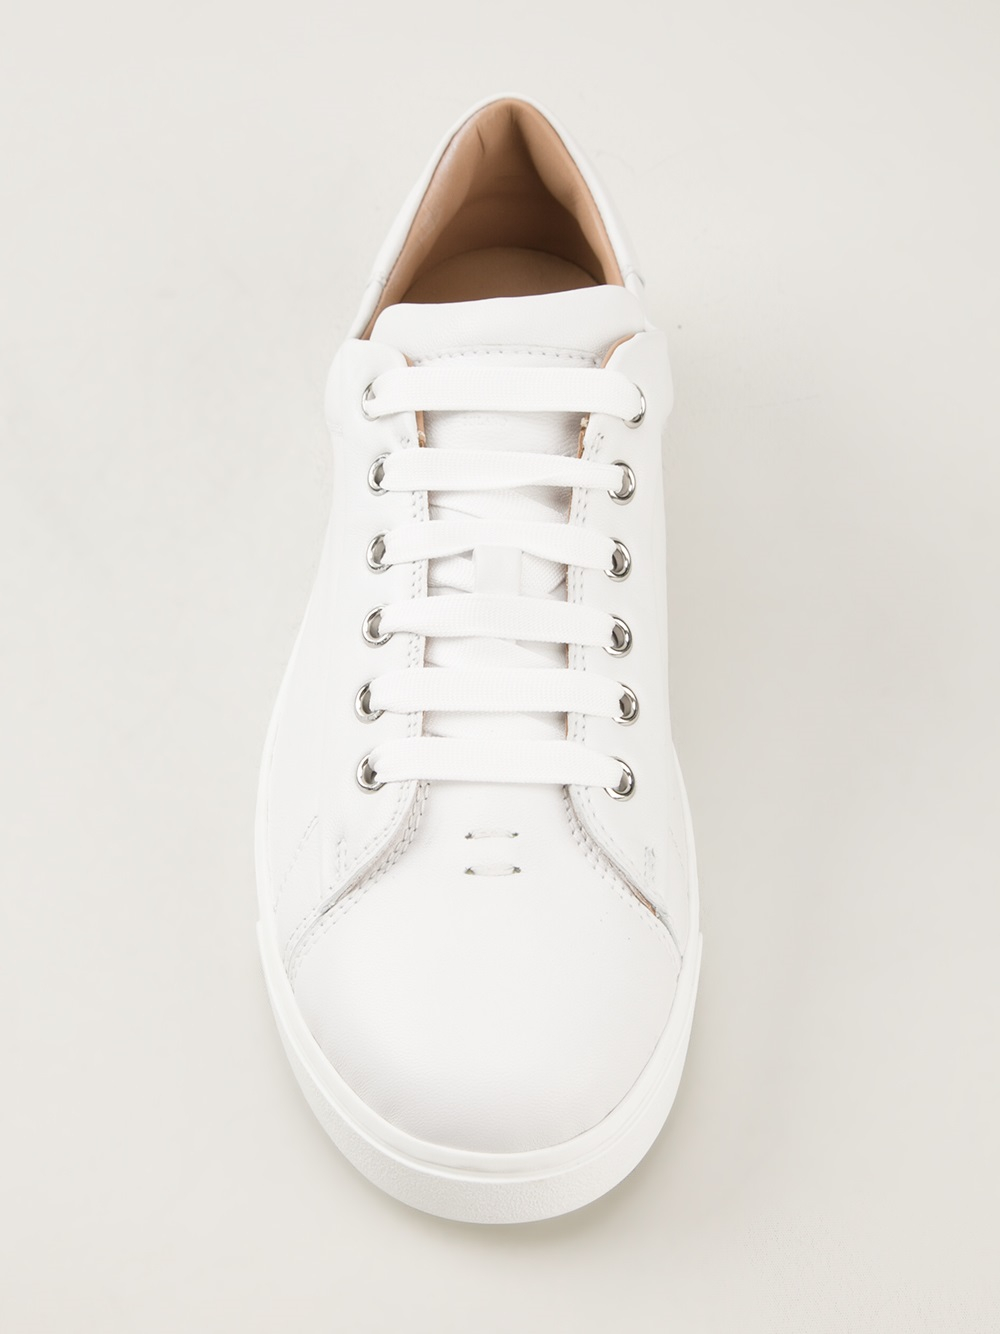 gianvito rossi white shoes